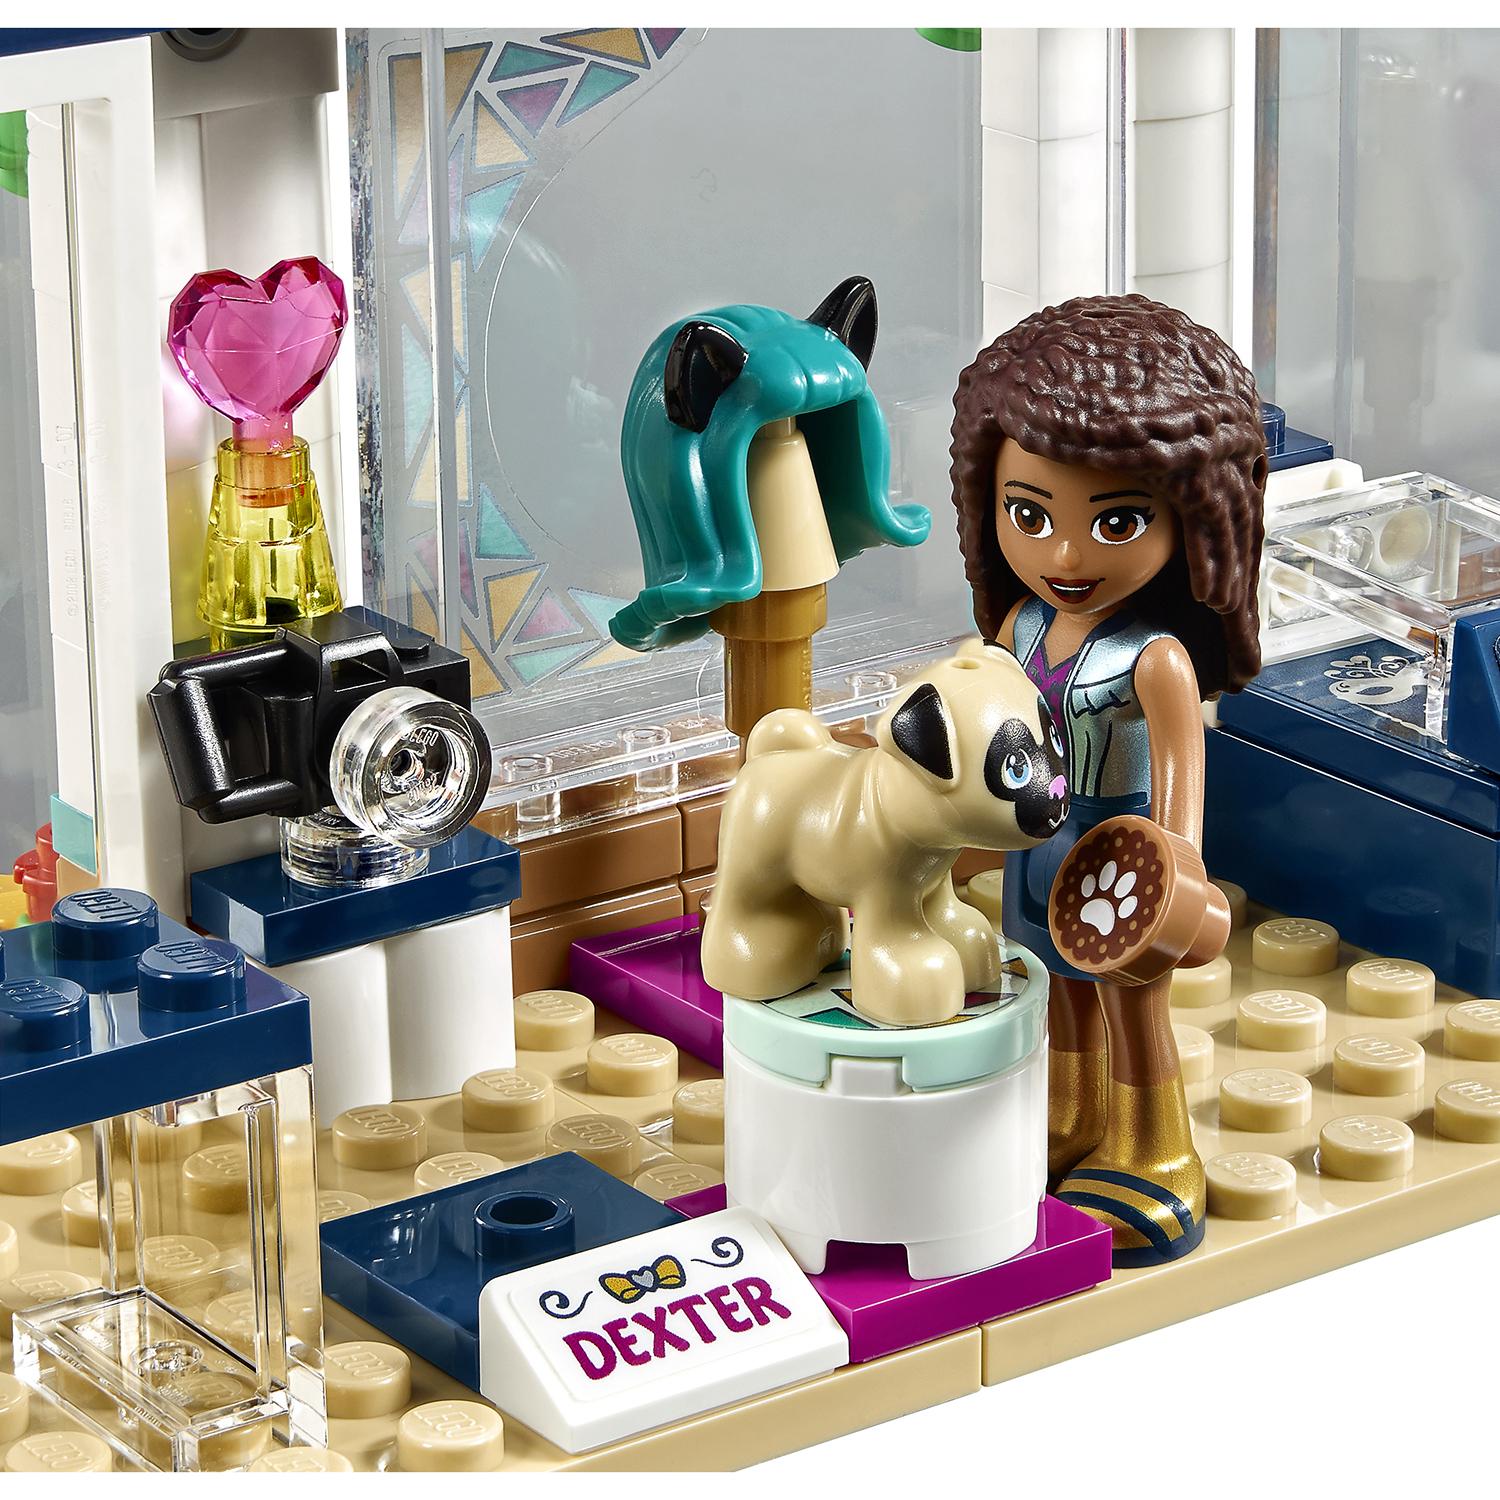 Lego Friends 41344 Магазин аксессуаров Андреа